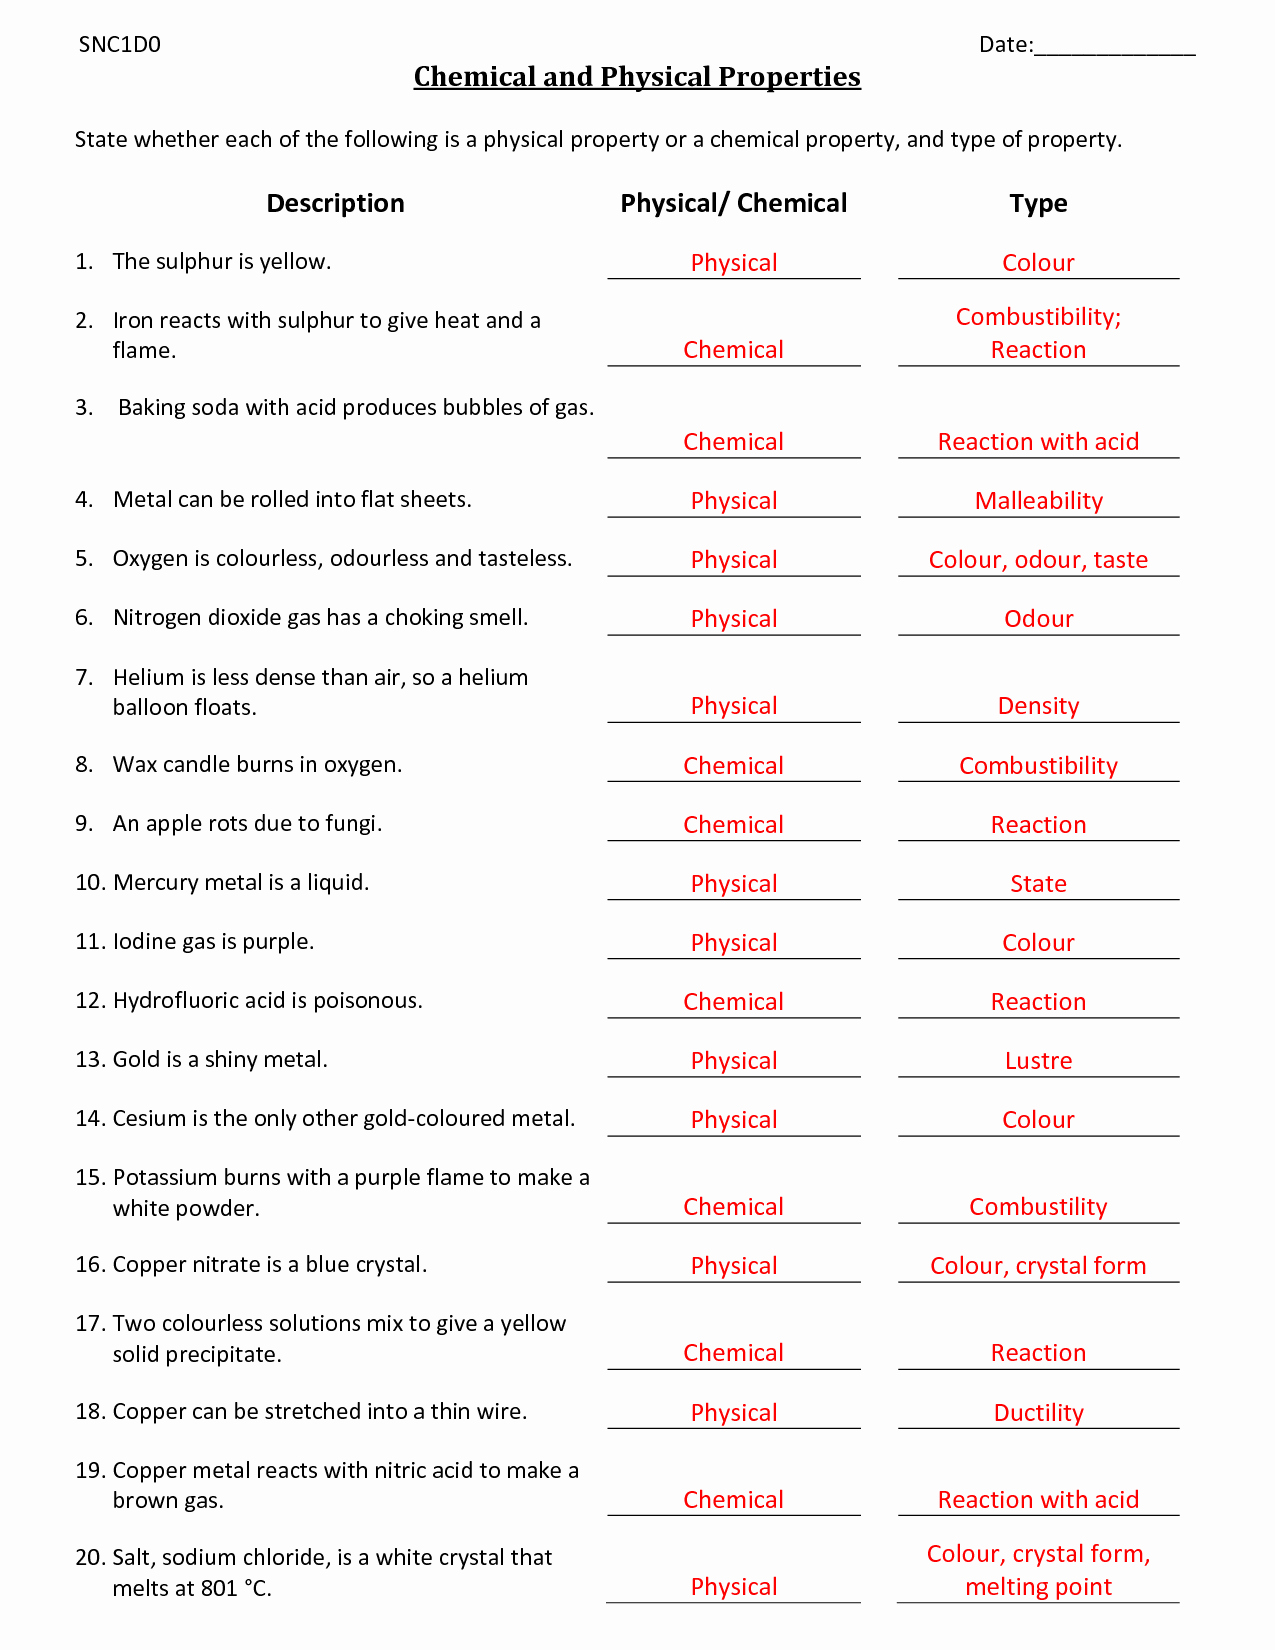 50 Physical Vs Chemical Properties Worksheet